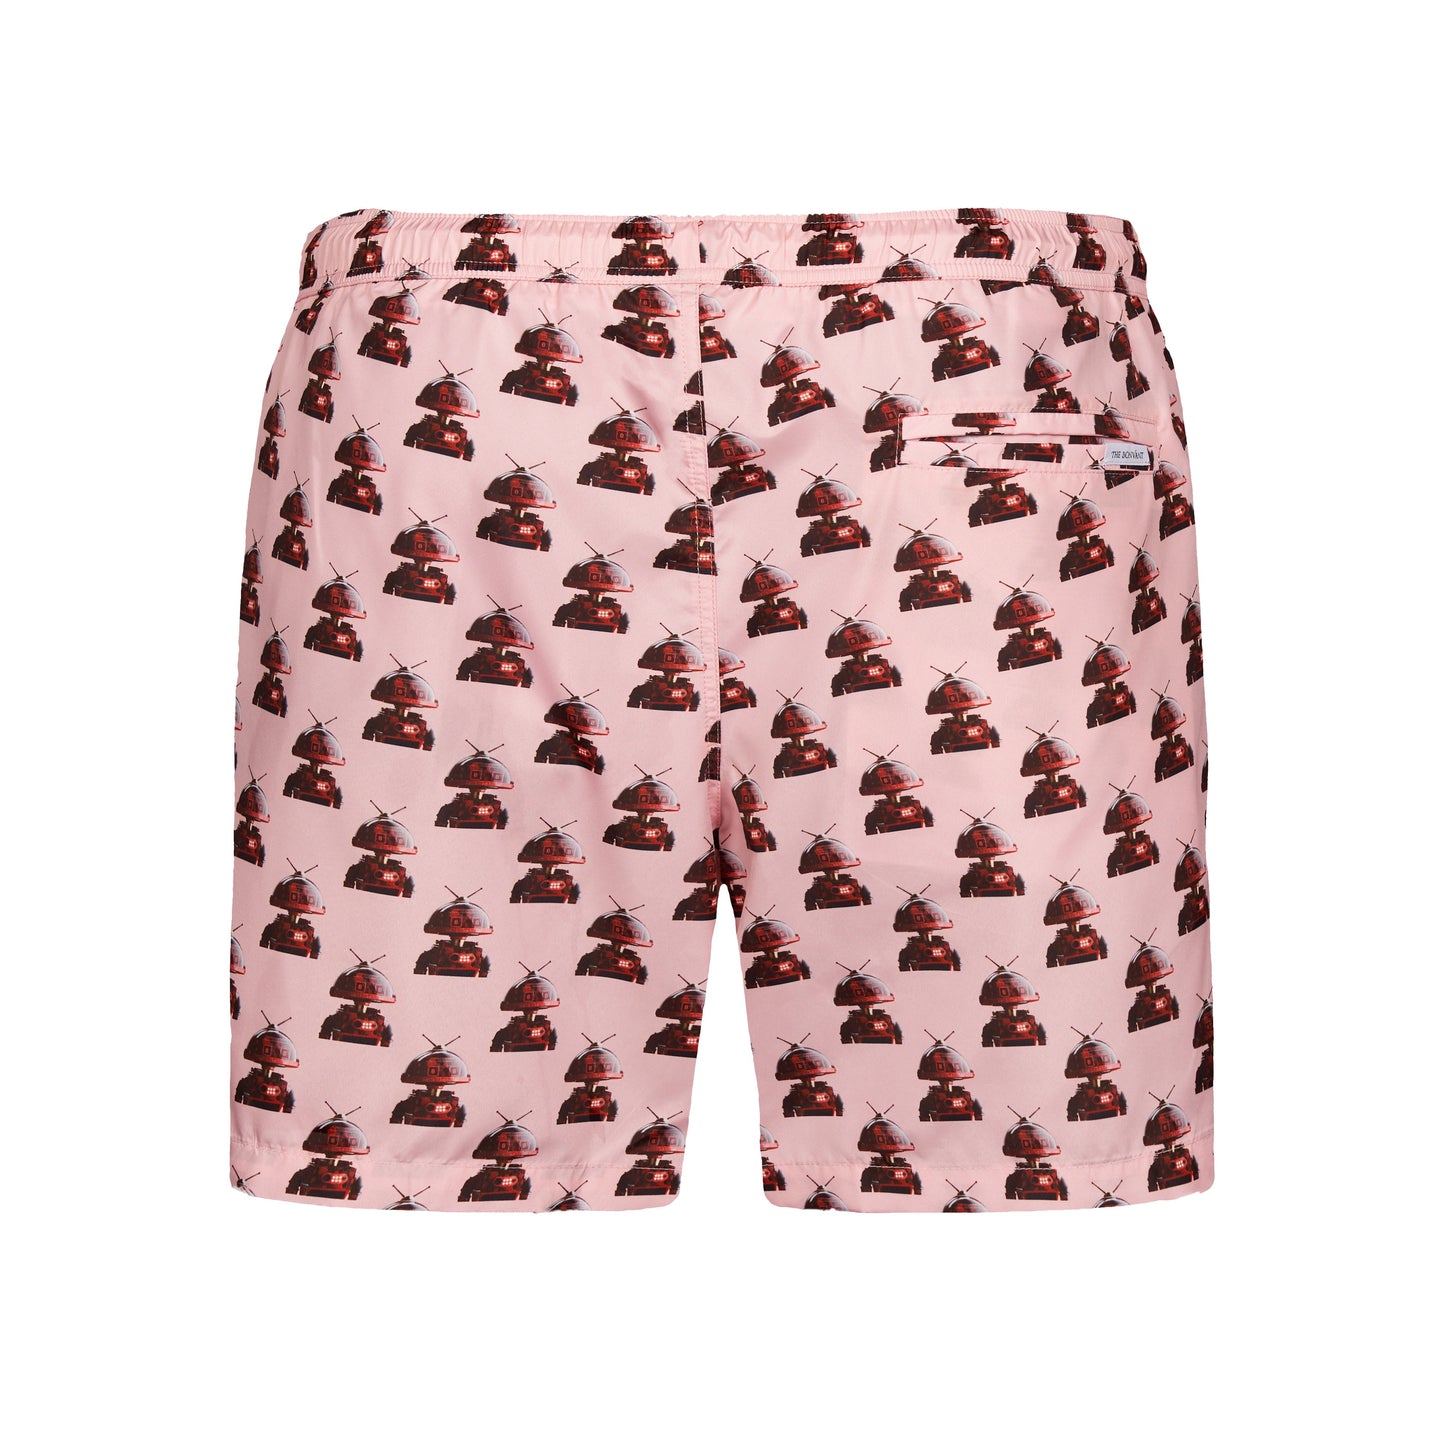 Swim shorts with AlphaBot #9527 print